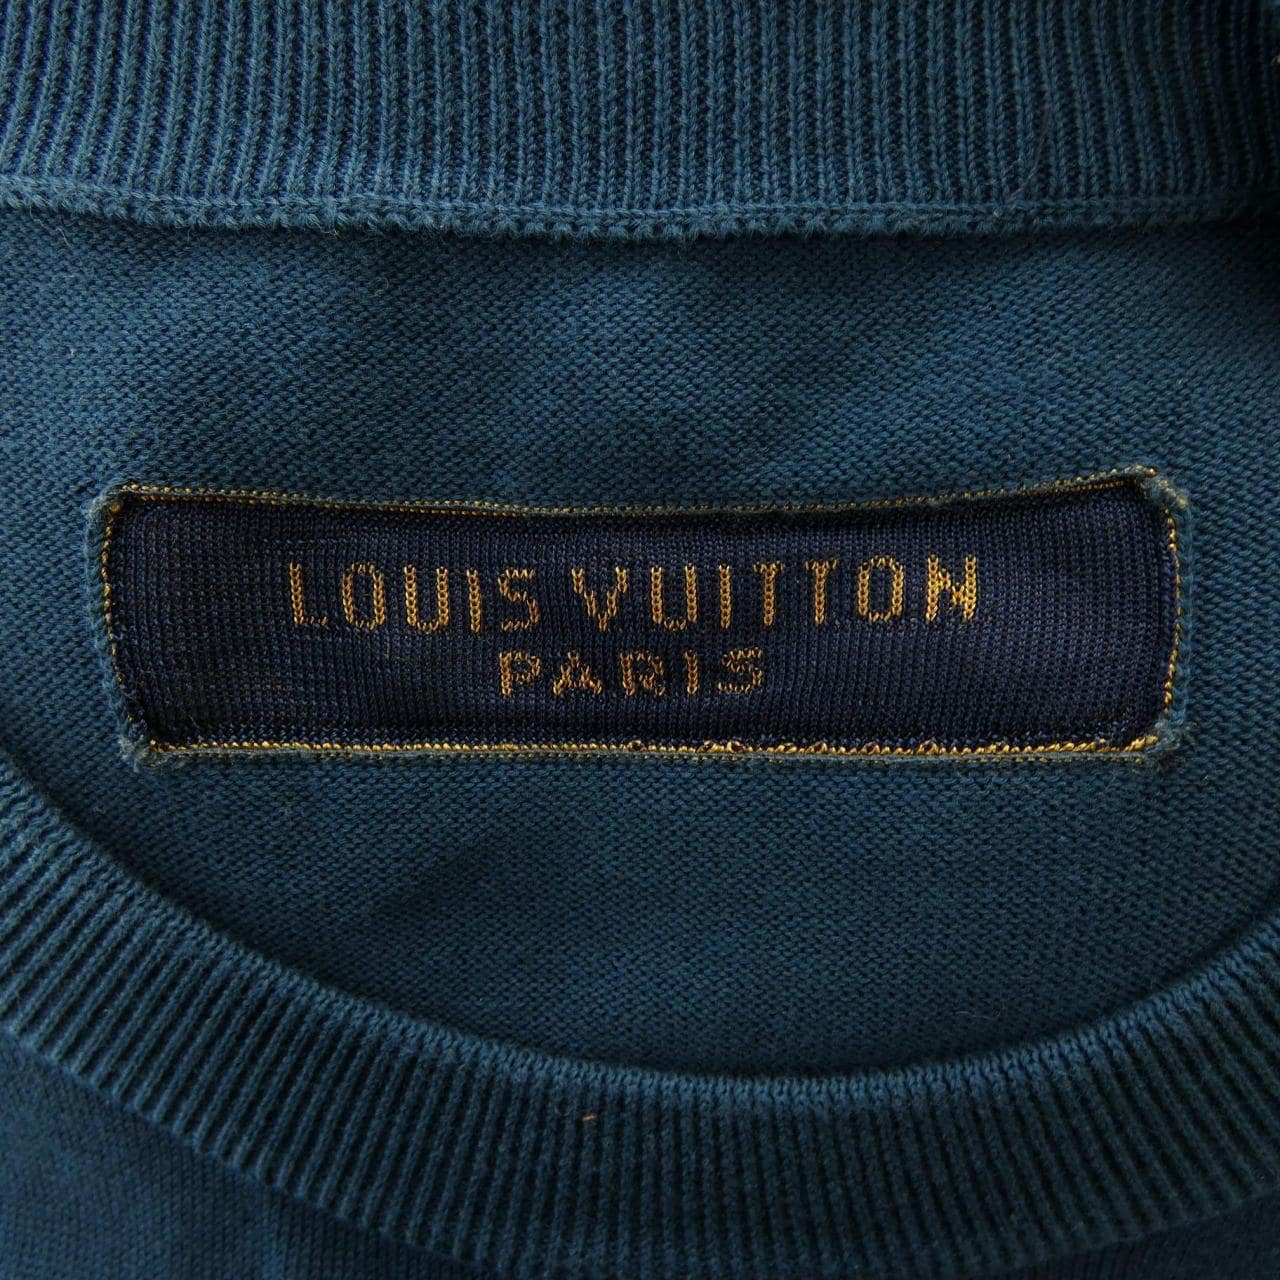 LOUIS VUITTON tops